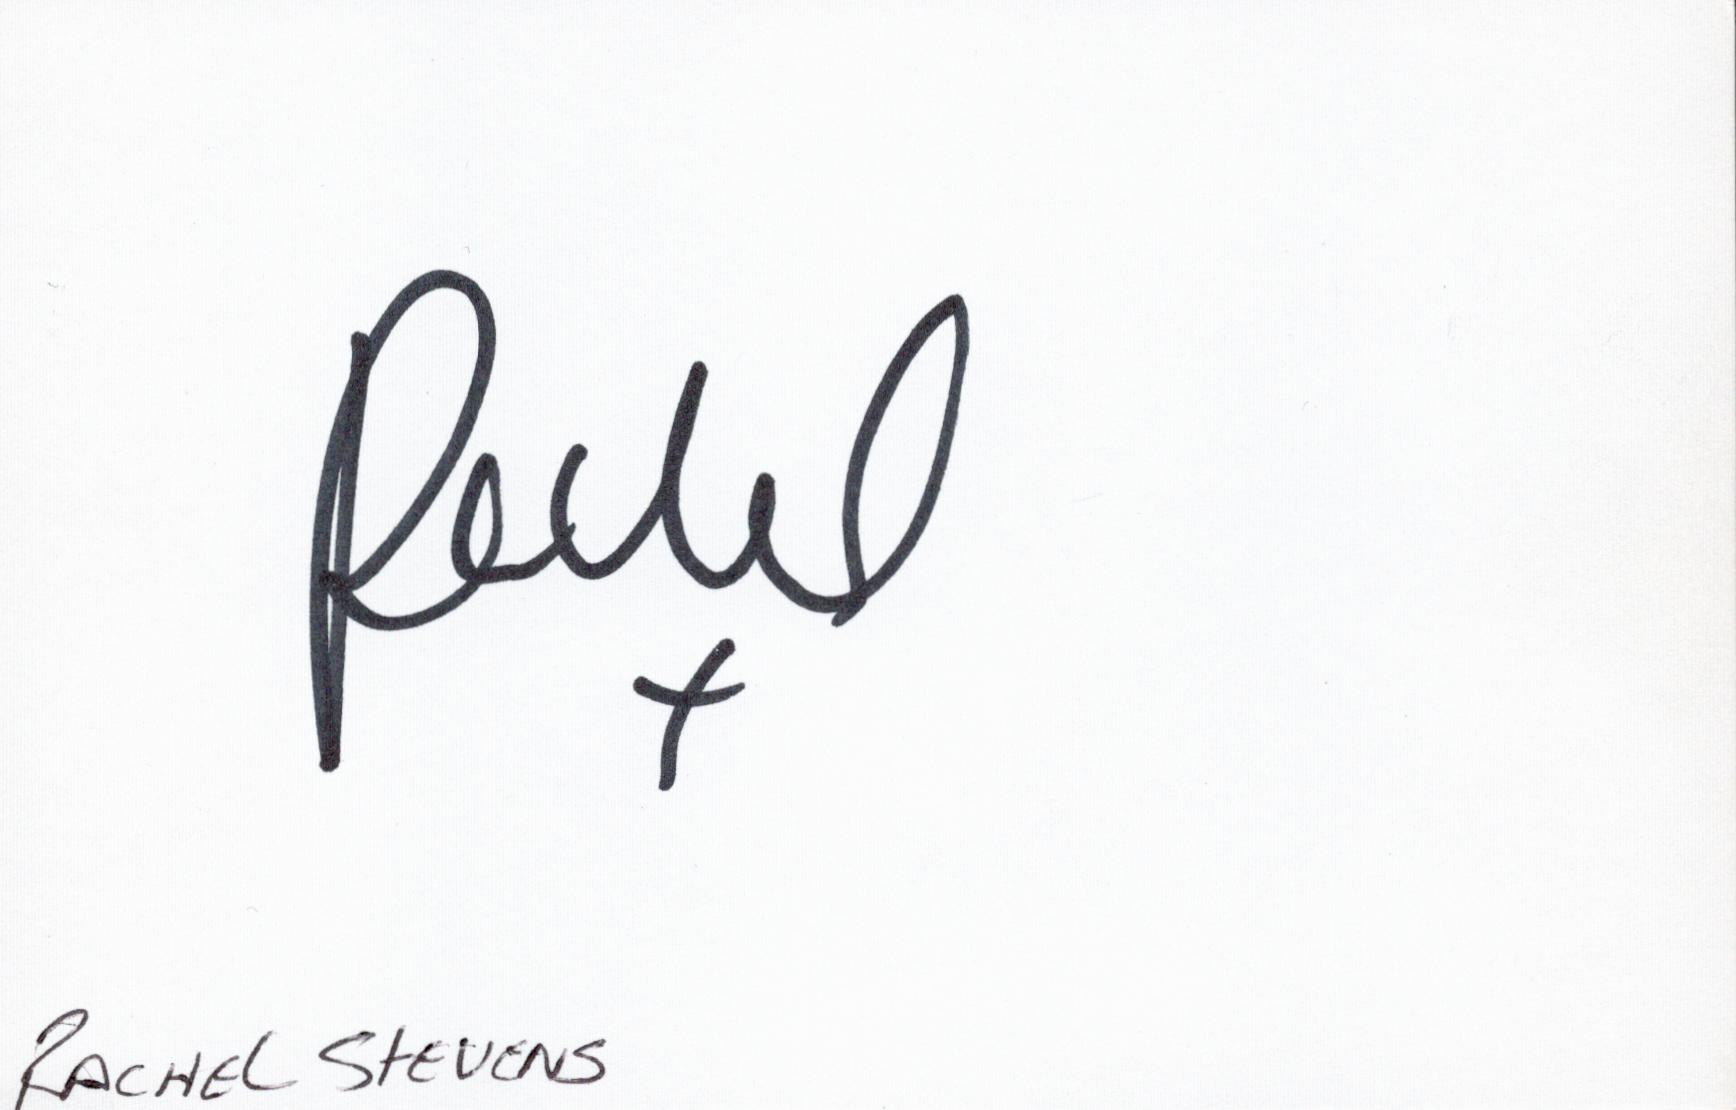 Music Rachel Stevens (S Club 7) signed signature card. Signed in black marker pen. Rachel Lauren